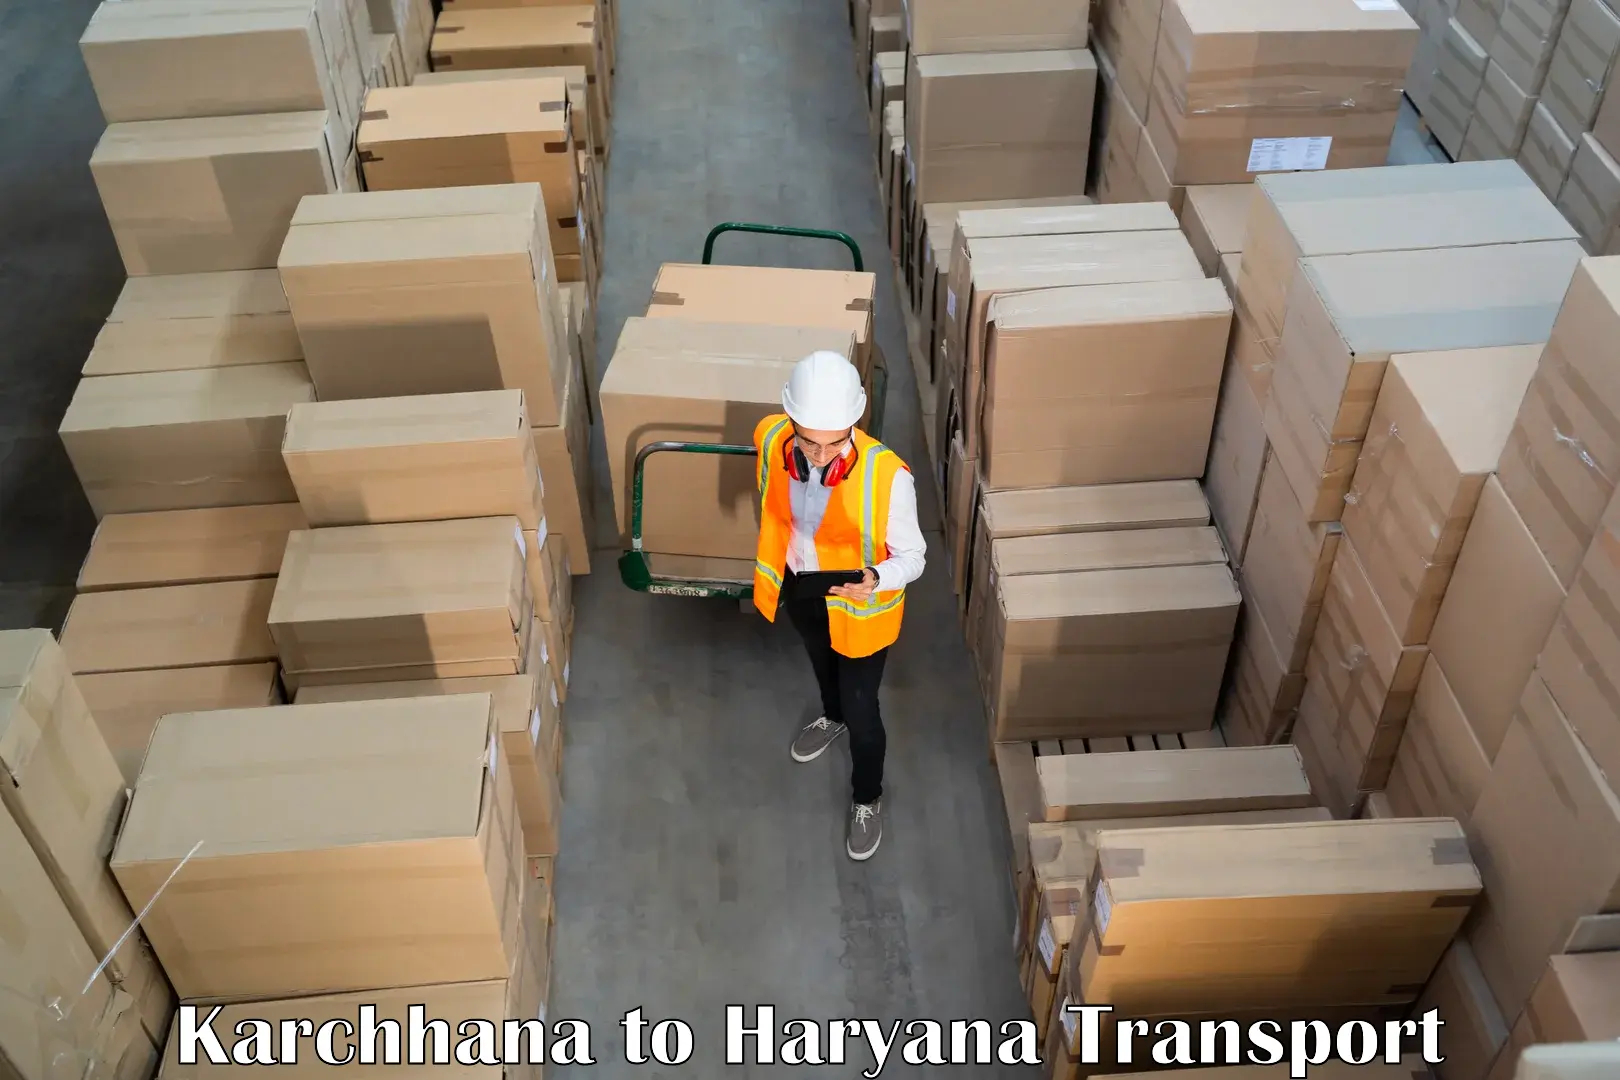 Truck transport companies in India Karchhana to Barwala